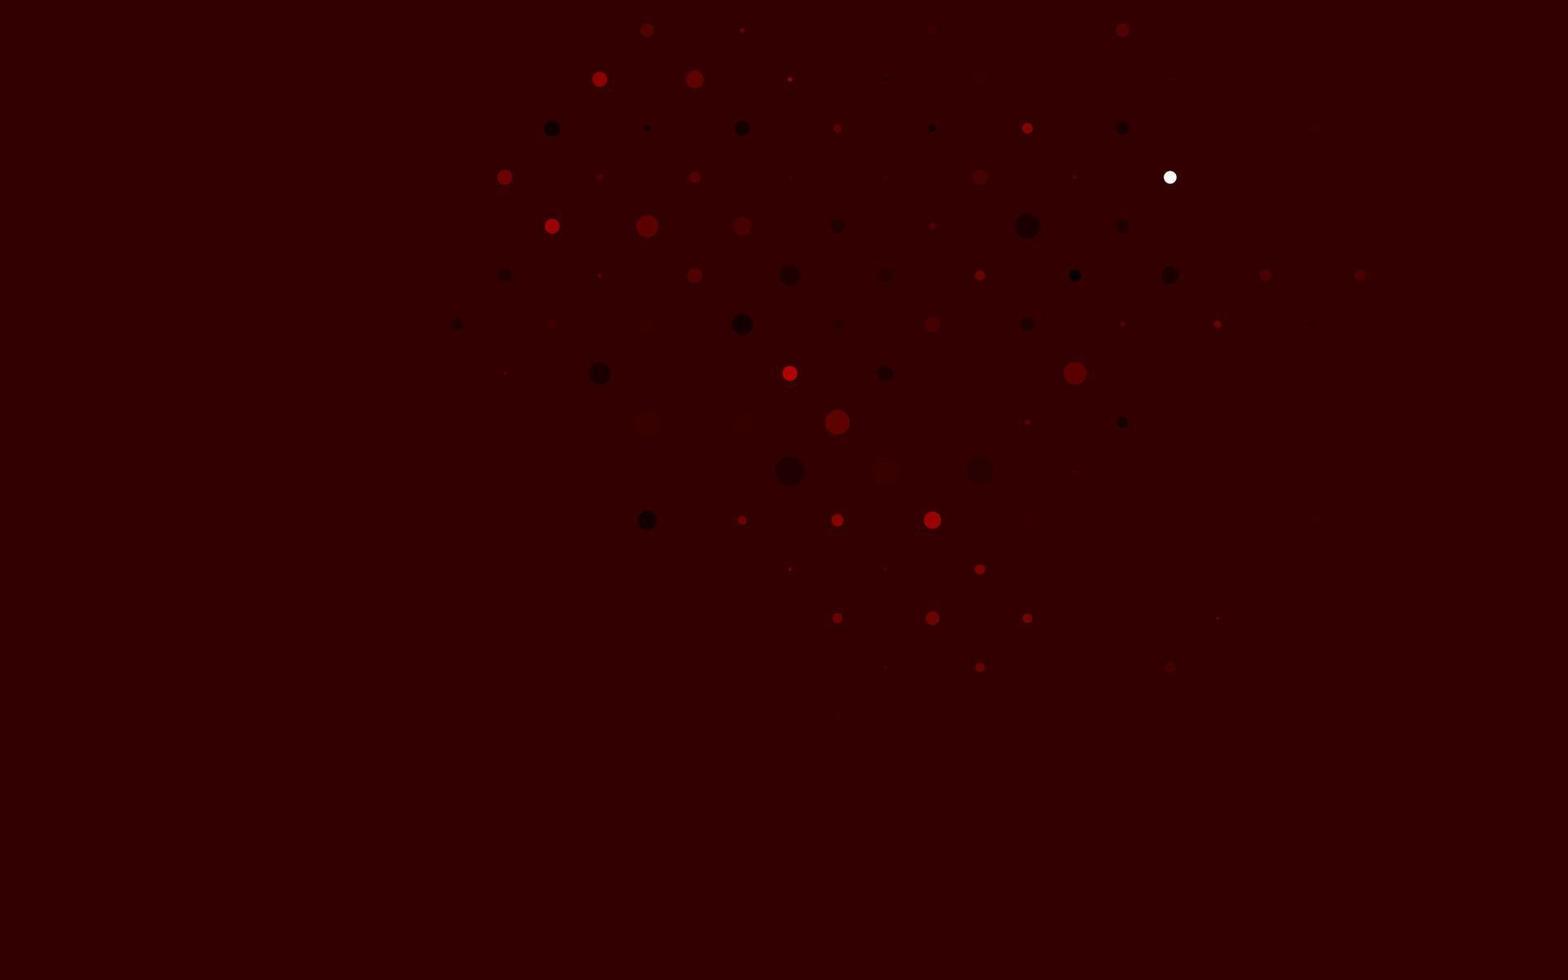 textura de vector rojo claro con discos.